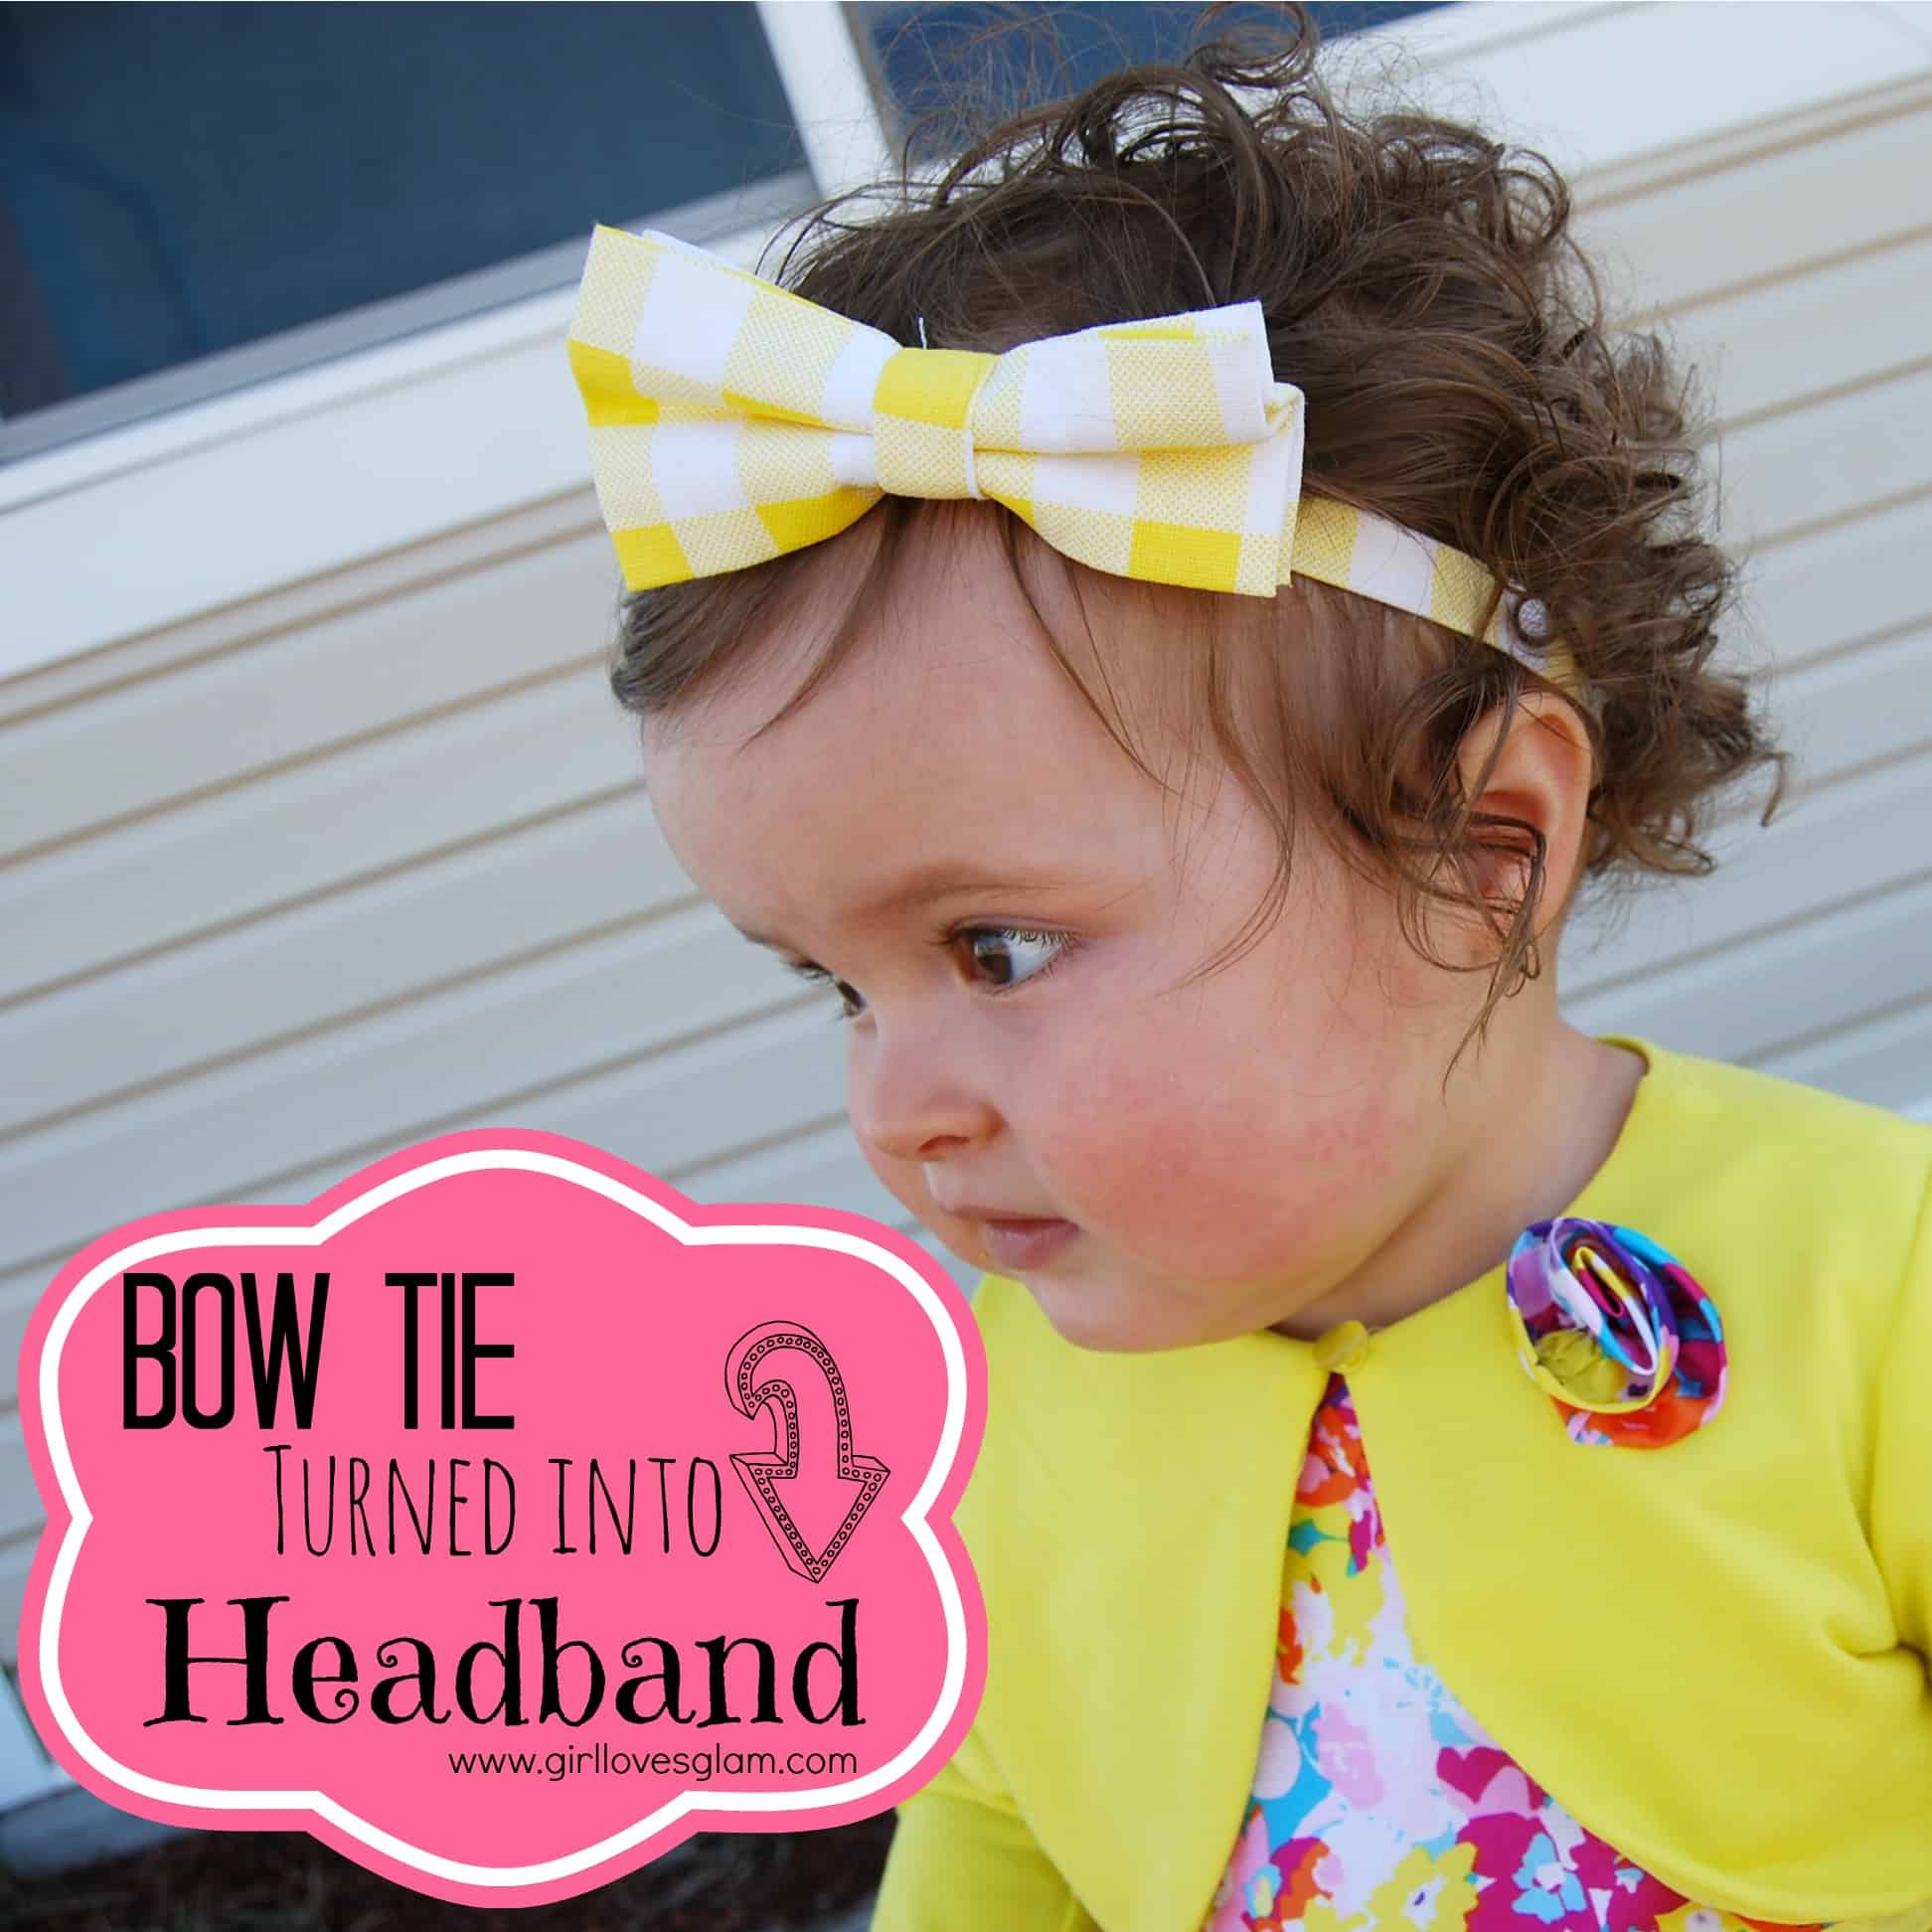 How to make a headband from a bow tie via www.girllovesglam.com #accessory #tutorial #headband